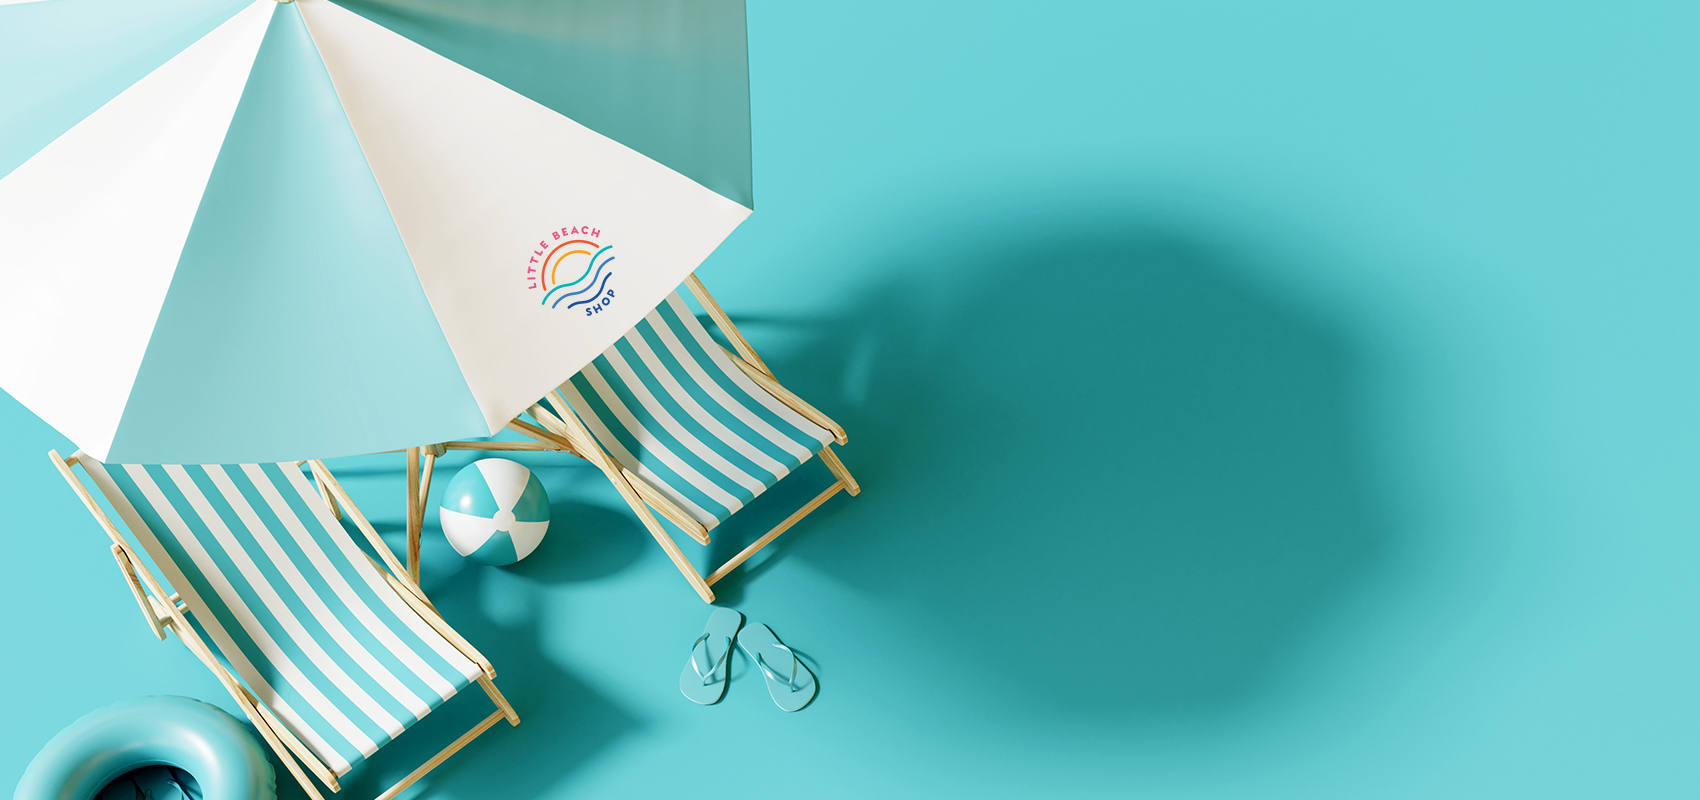 aqua and white beach umbrella and beach product branding